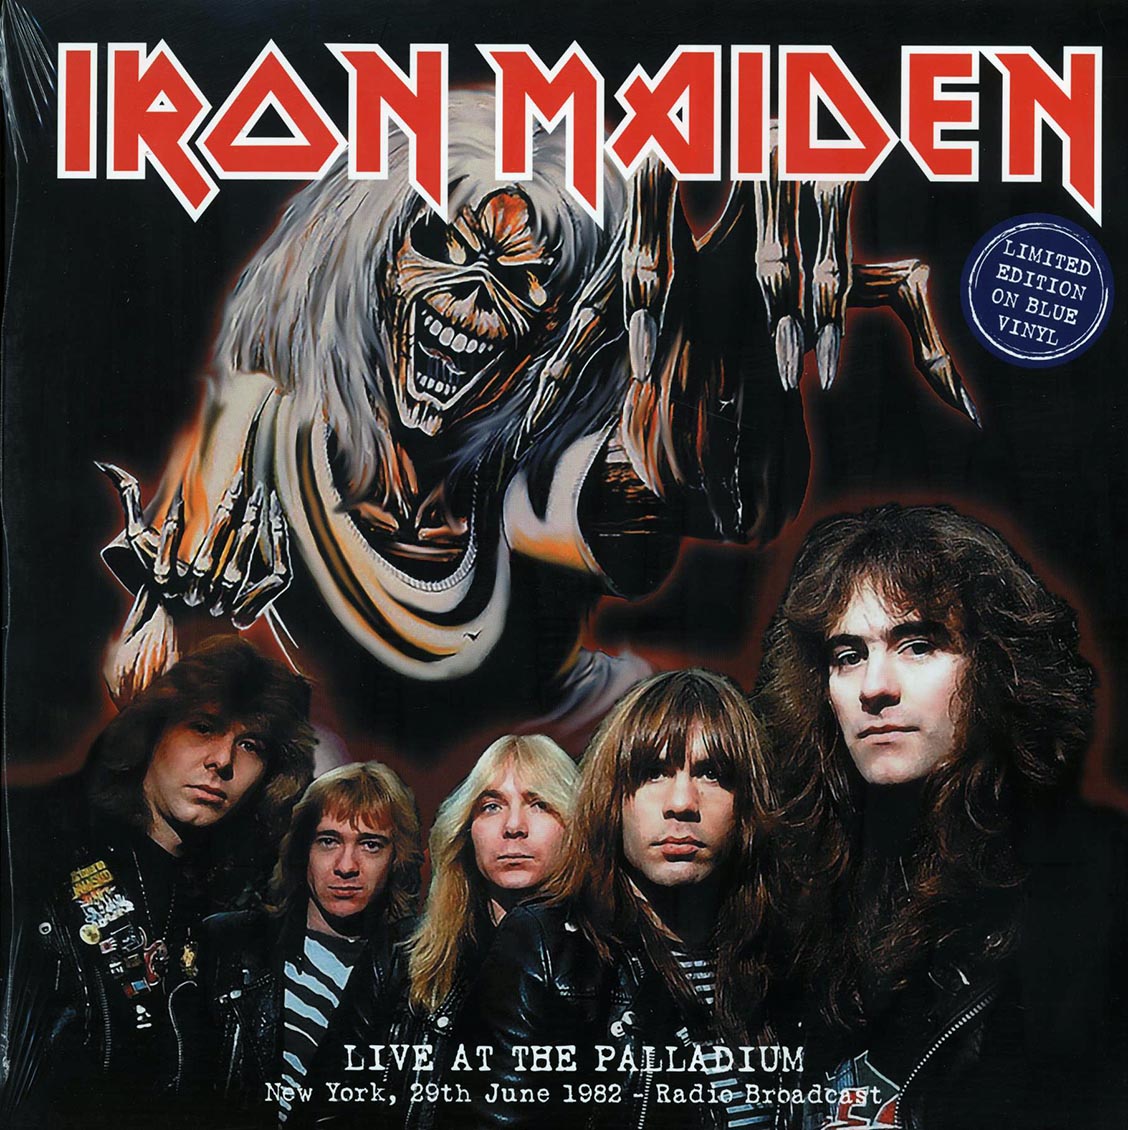 Iron Maiden - Live At The Palladium, New York, 29th June 1982 Radio Broadcast (ltd. 500 copies made) (blue vinyl) - Vinyl LP